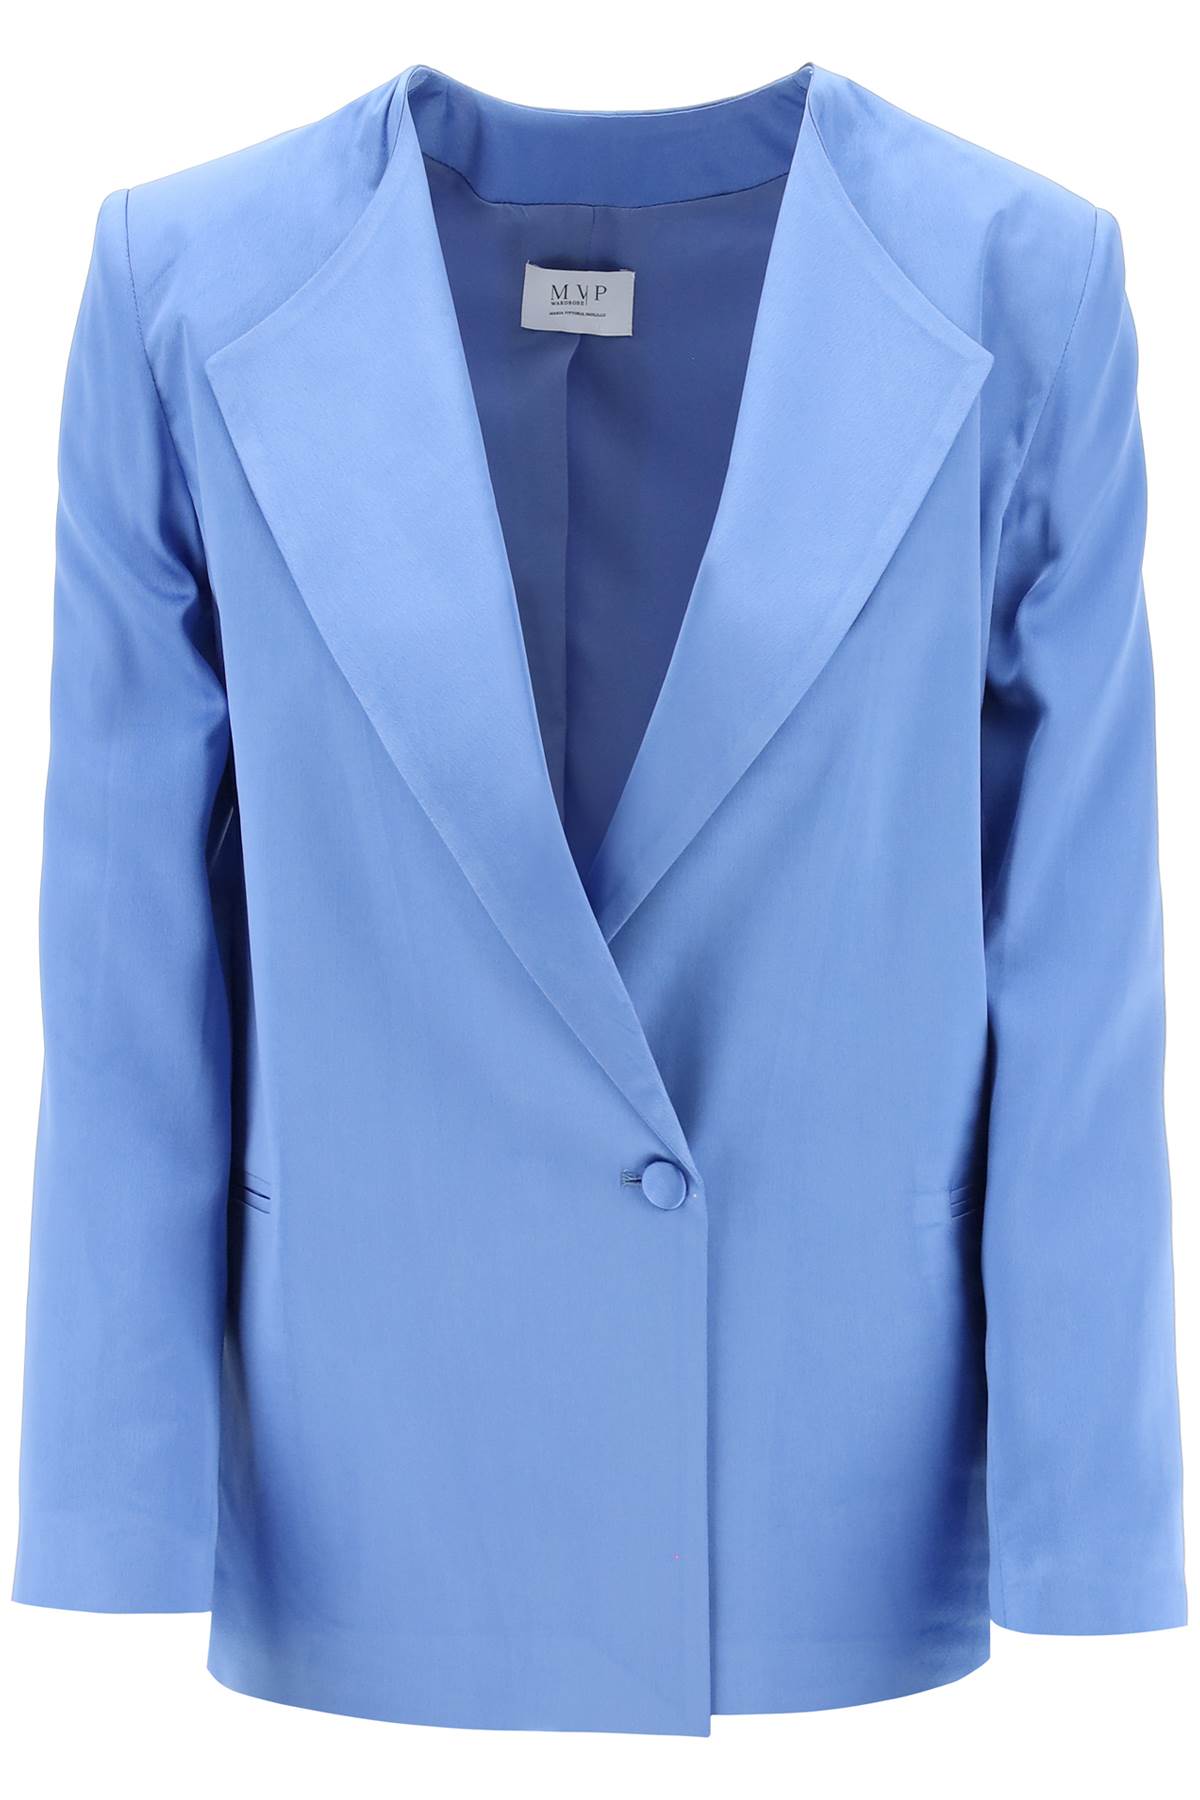 Mvp wardrobe grand ribaud jacket-0